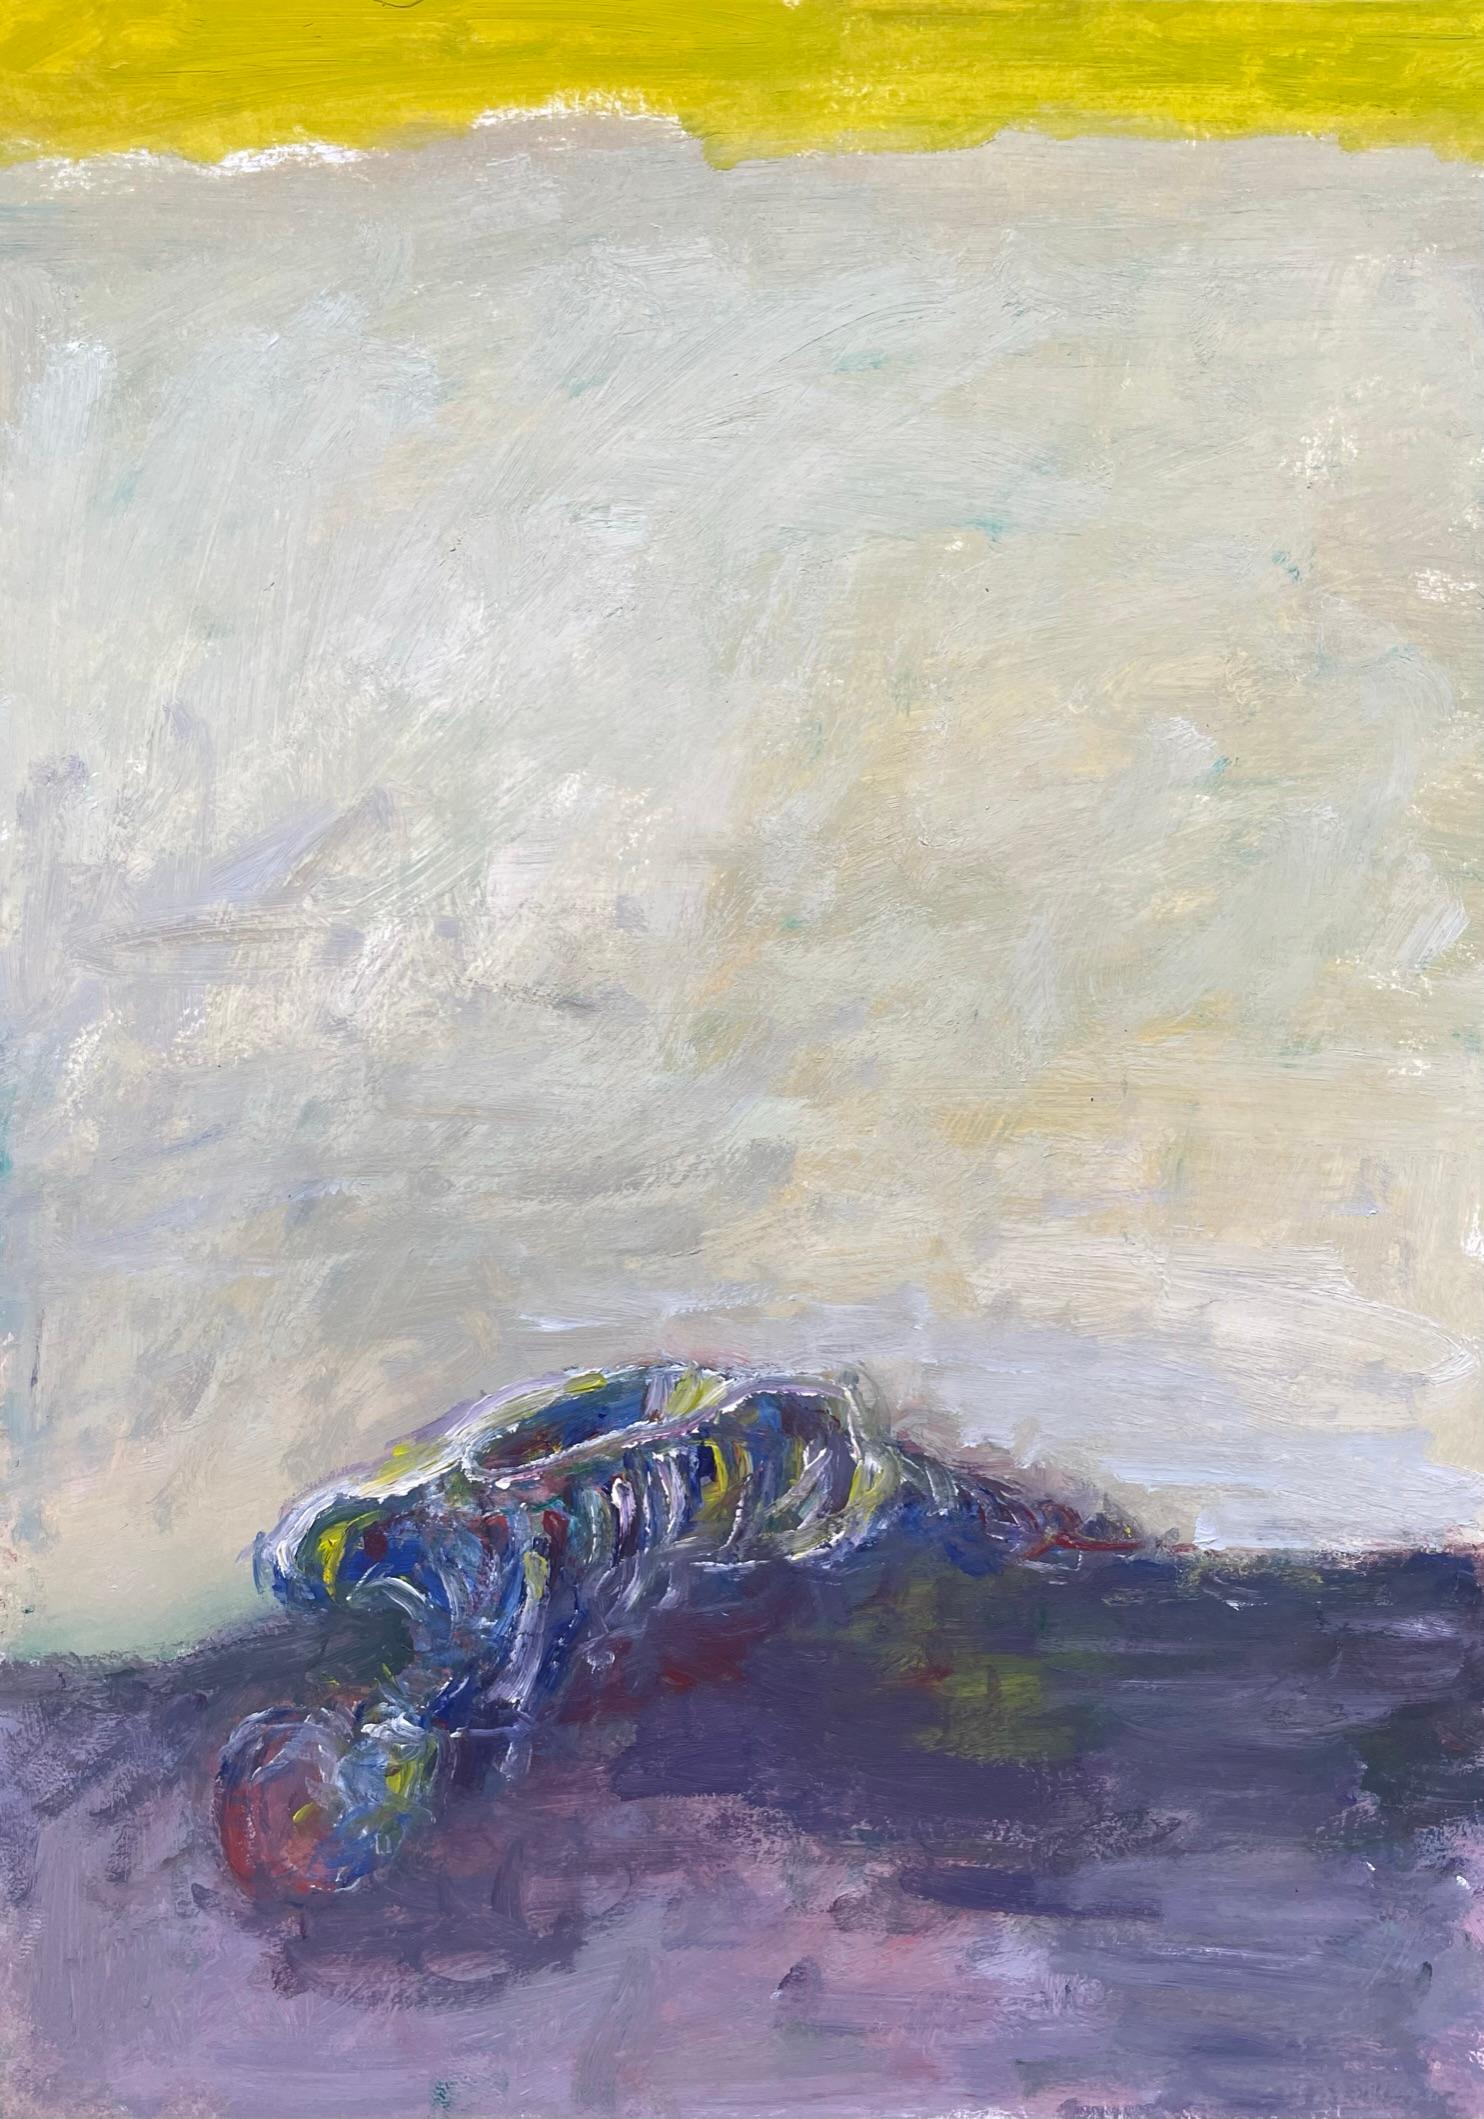 Remains (Body in the Field 11) - Art contemporain, XXIe siècle, jaune, bleu